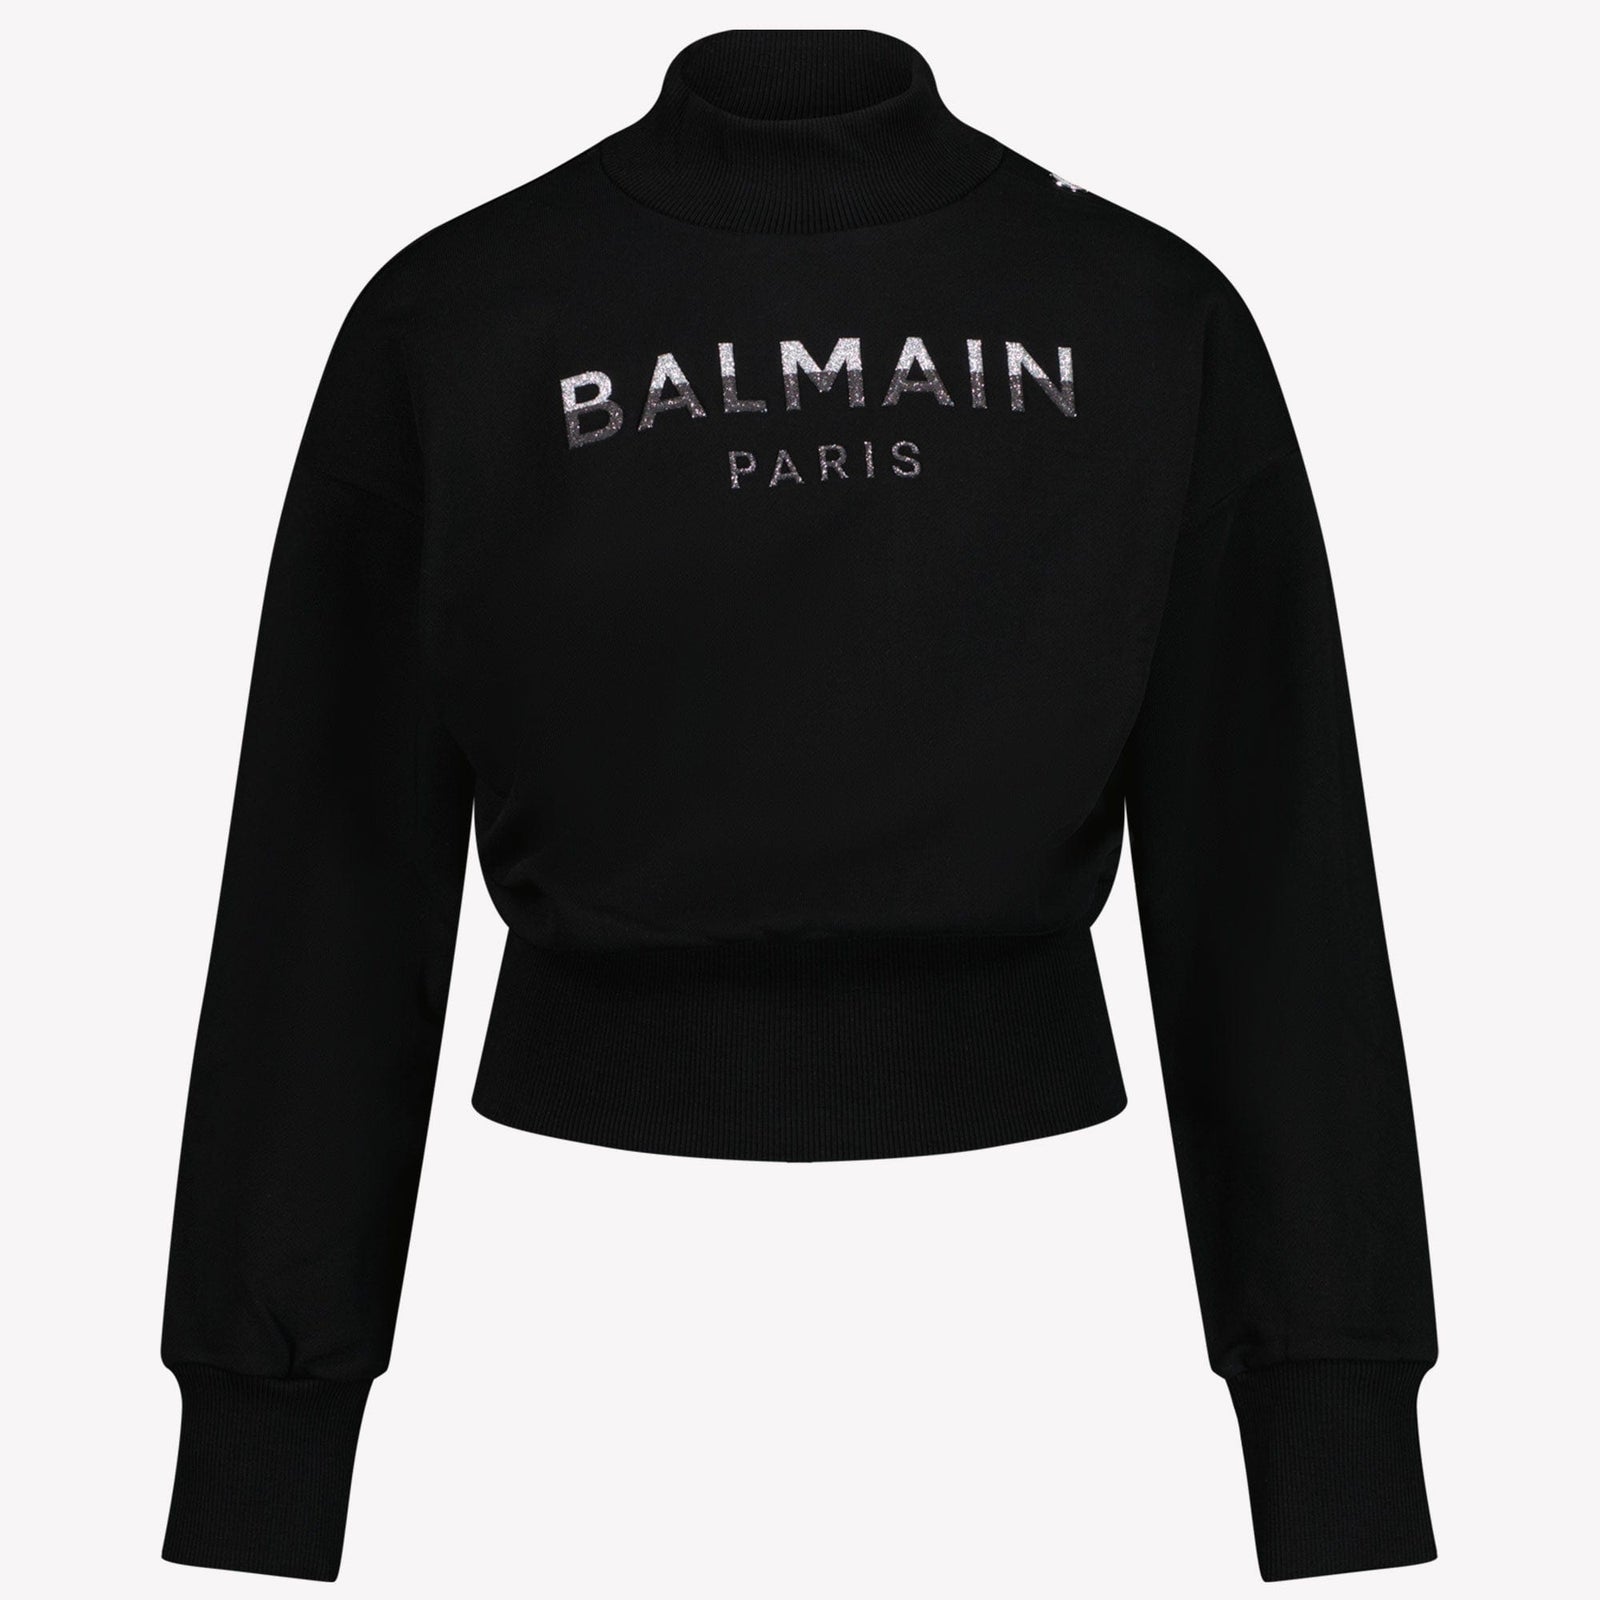 Balmain Flickor tröja svart